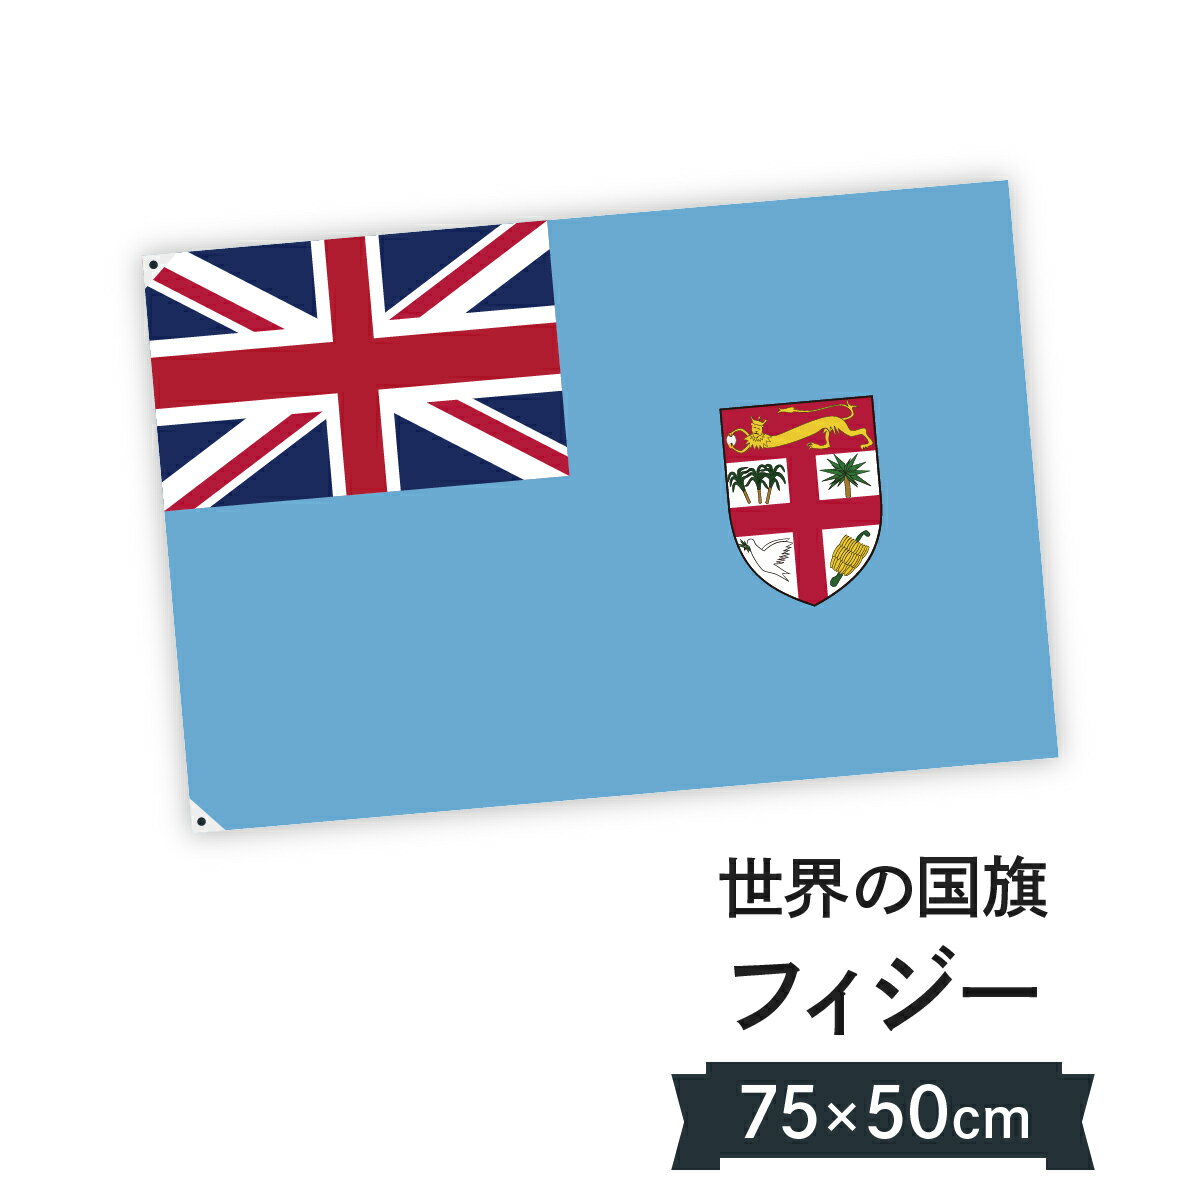 Snowry 相互フォロー V Twitter 東大王 Tbs フィジー の国旗は左上のユニオン ジャックはイギリス連邦の一員 水色は太平洋を表す フィジー共和国 国旗 W75cm H50cm 楽天 T Co Dvzqunoqom Rakuafl